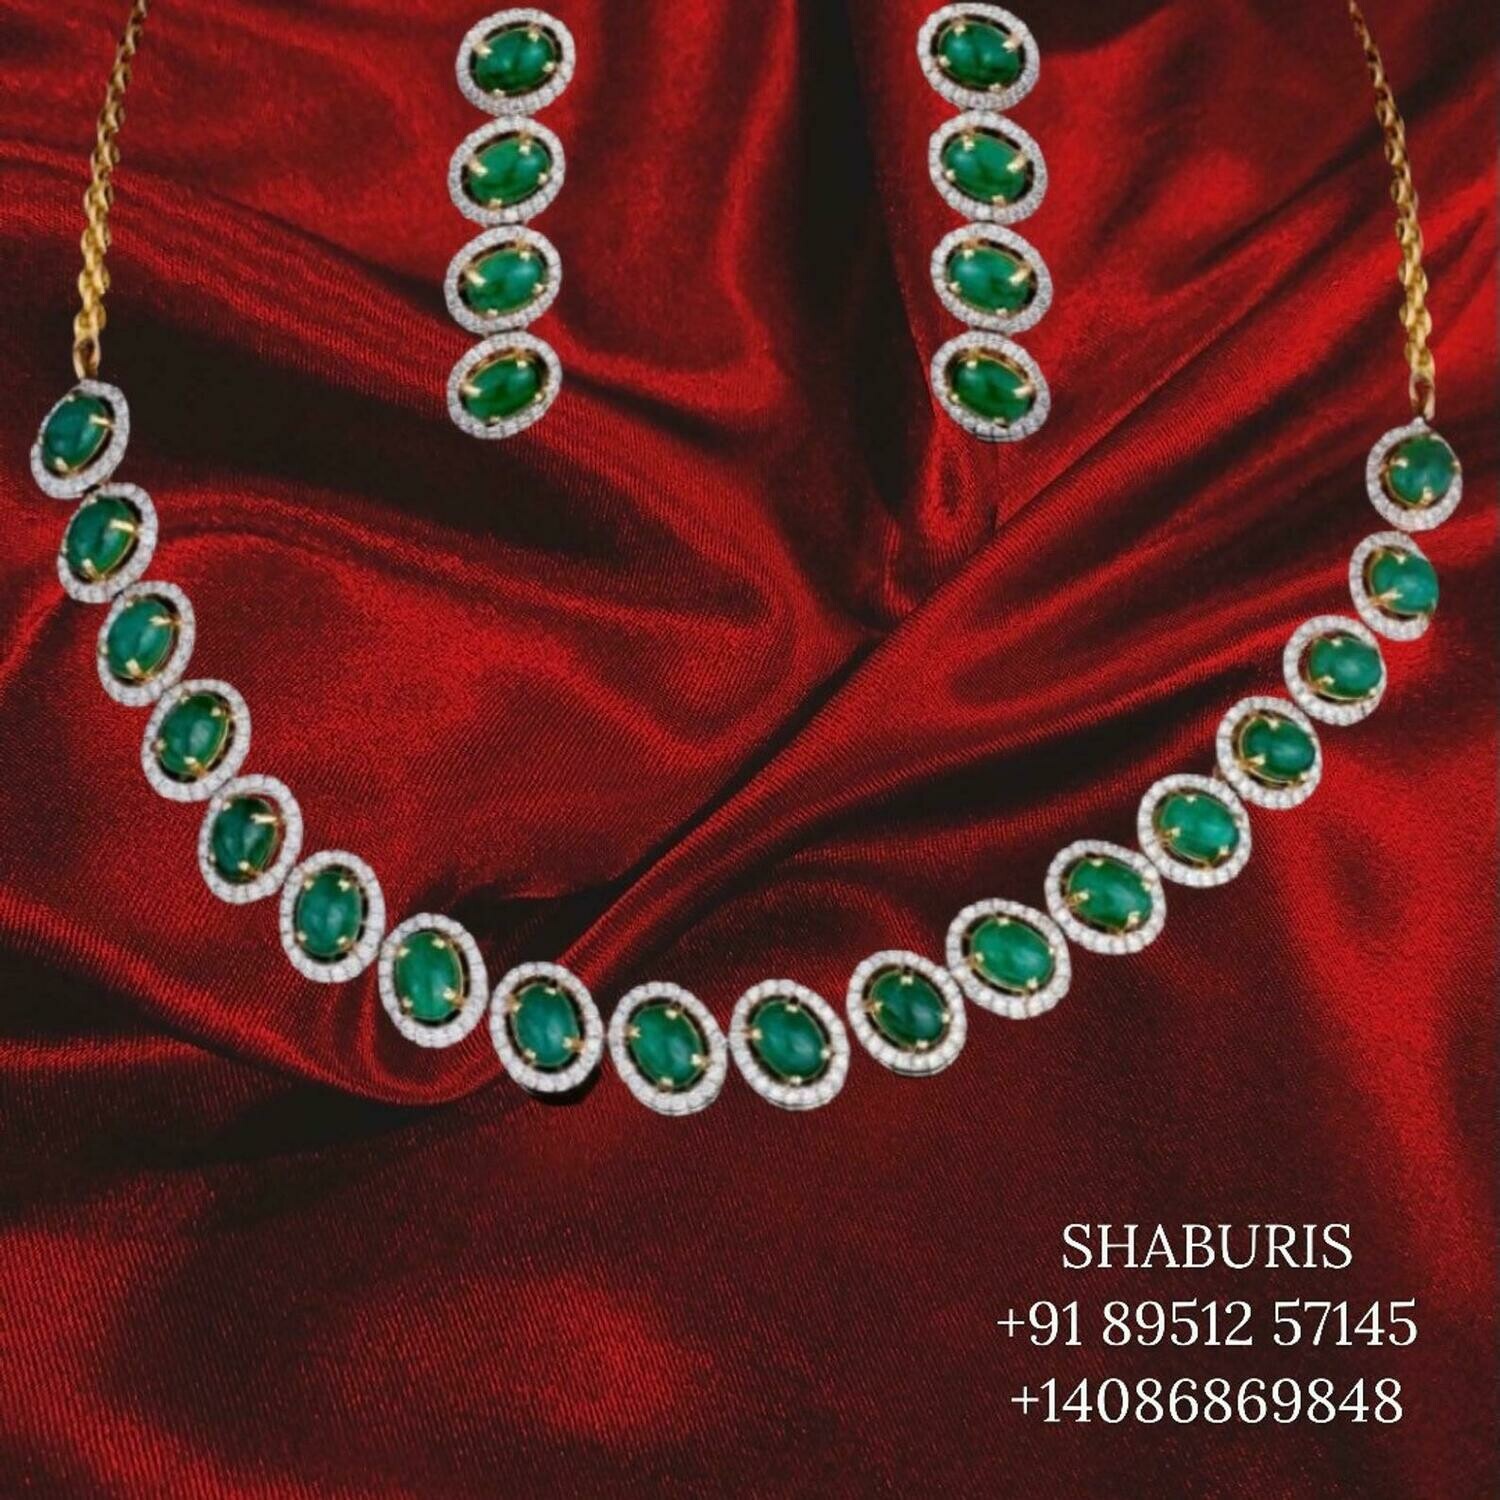 Diamond necklace indian gold jewelry designs diamond earrings diamond jhumkas emerald necklace bead jewelry sets -SHABURIS